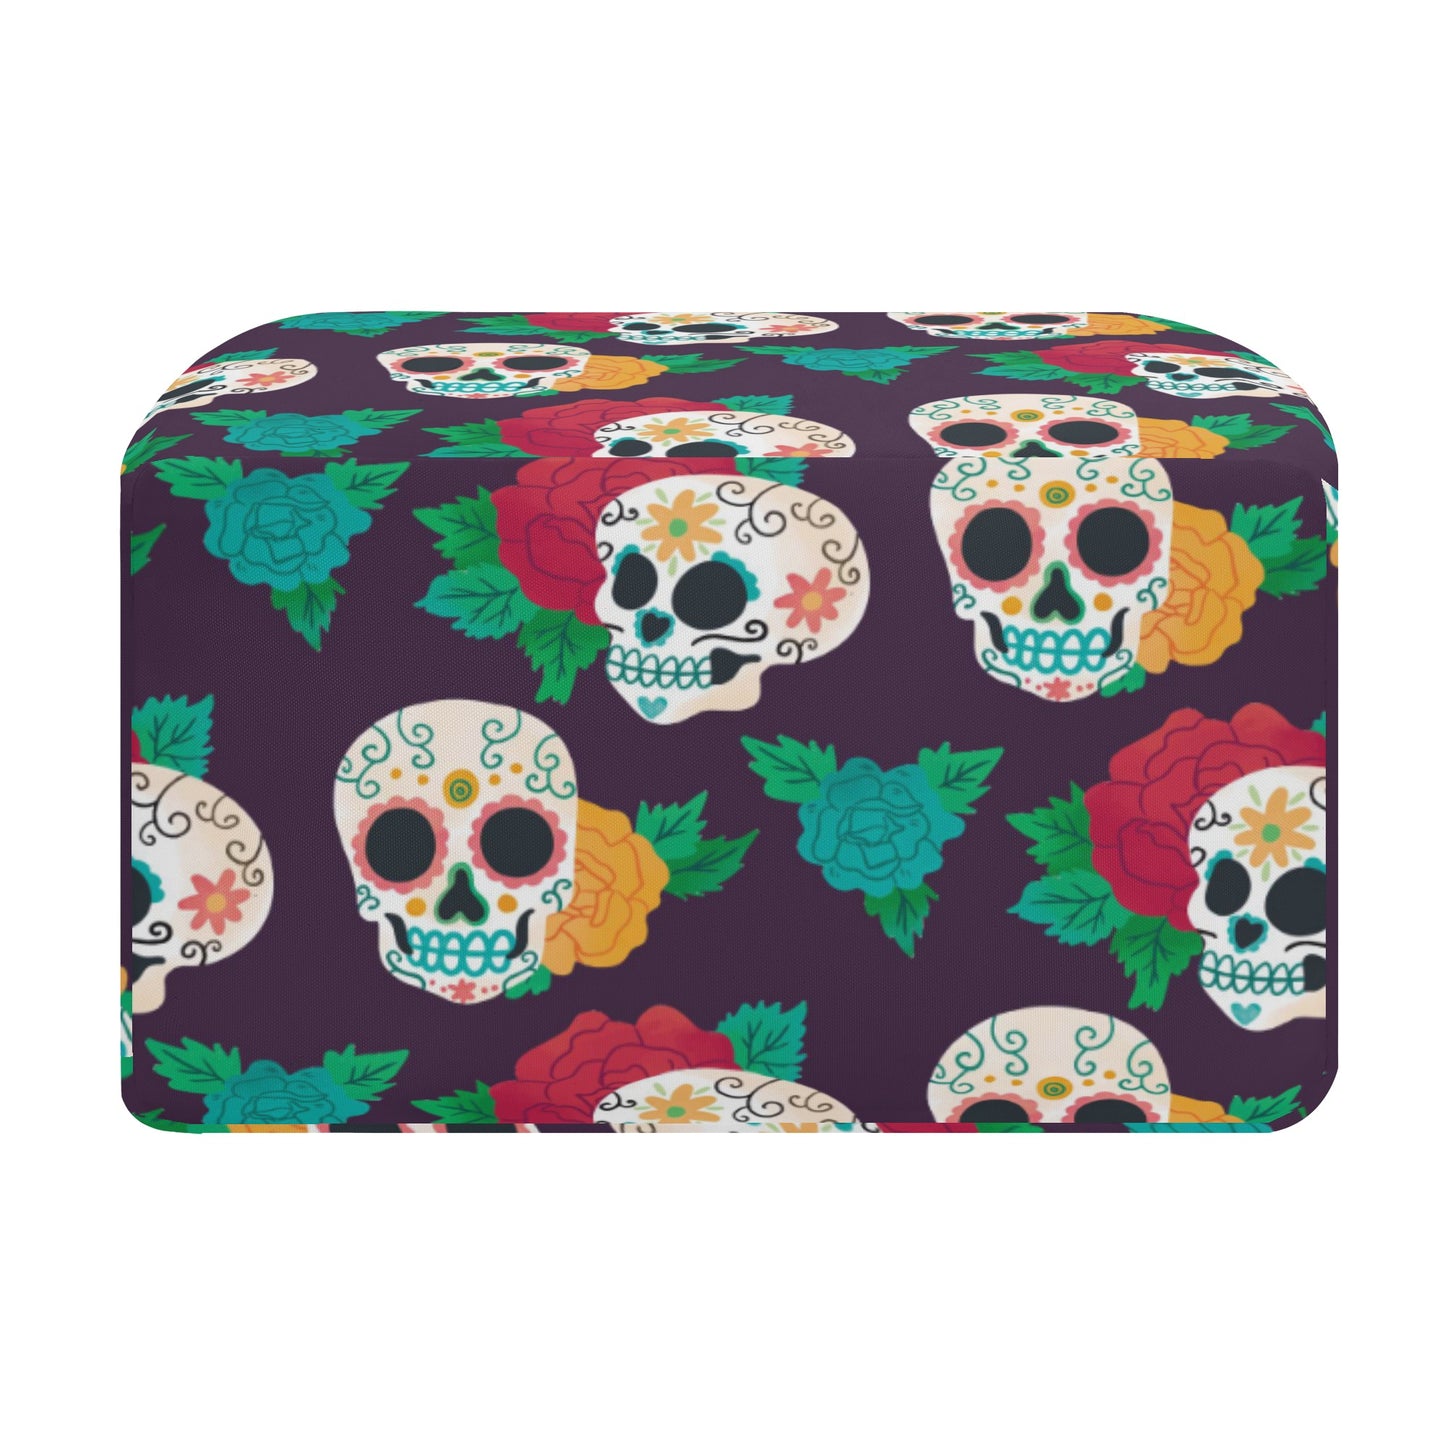 Rose Calaveras sugar skull Portable Tote Lunch Bag